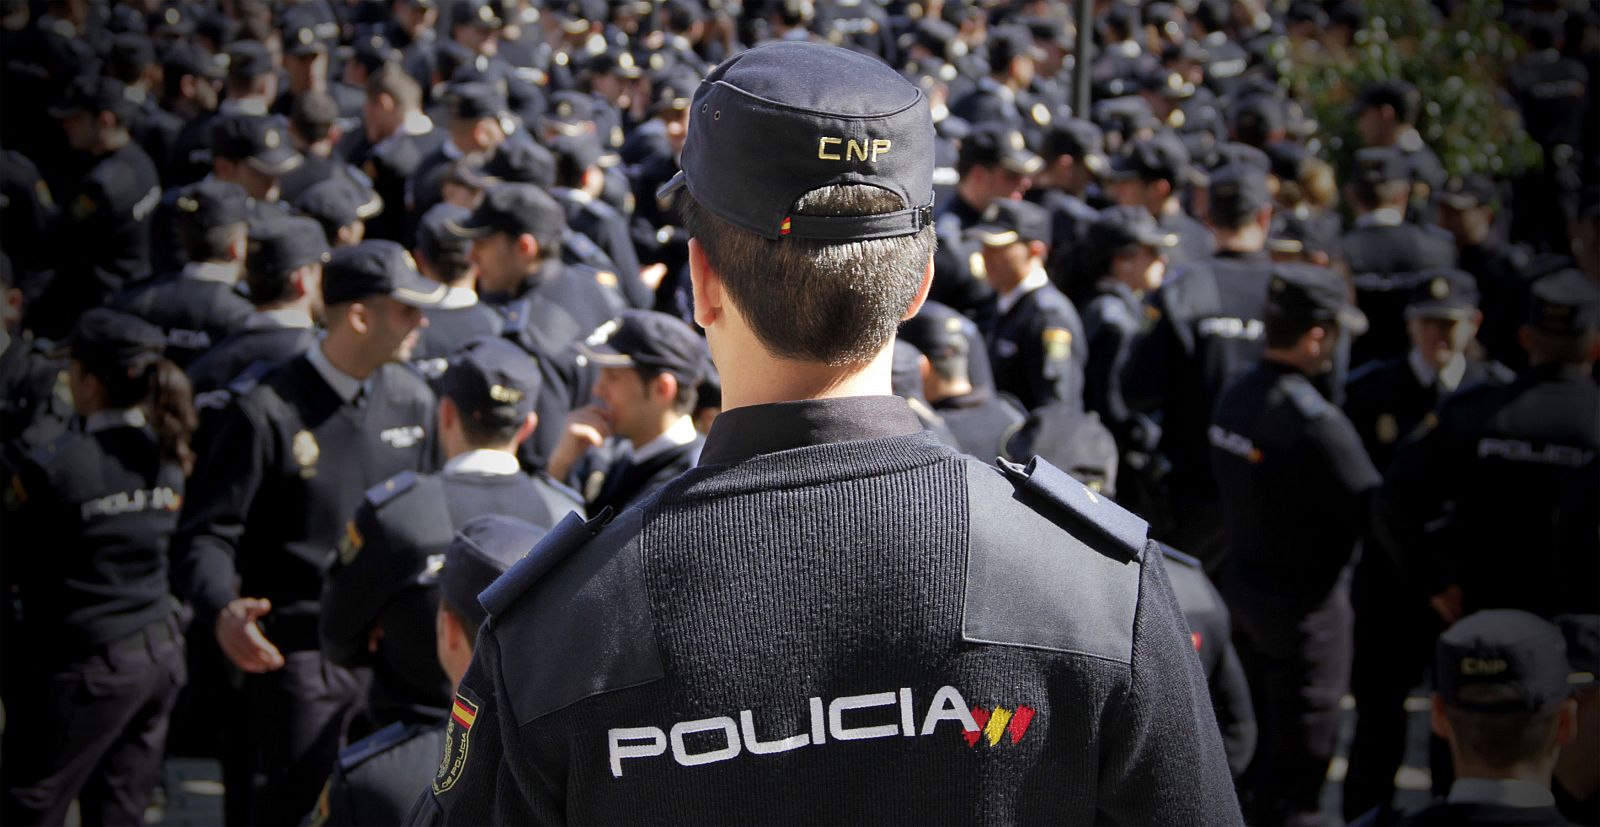 PROMOCION, GORRA OFICIAL UNIFORMIDAD ESCALA BASICA POLICIA NACIONAL